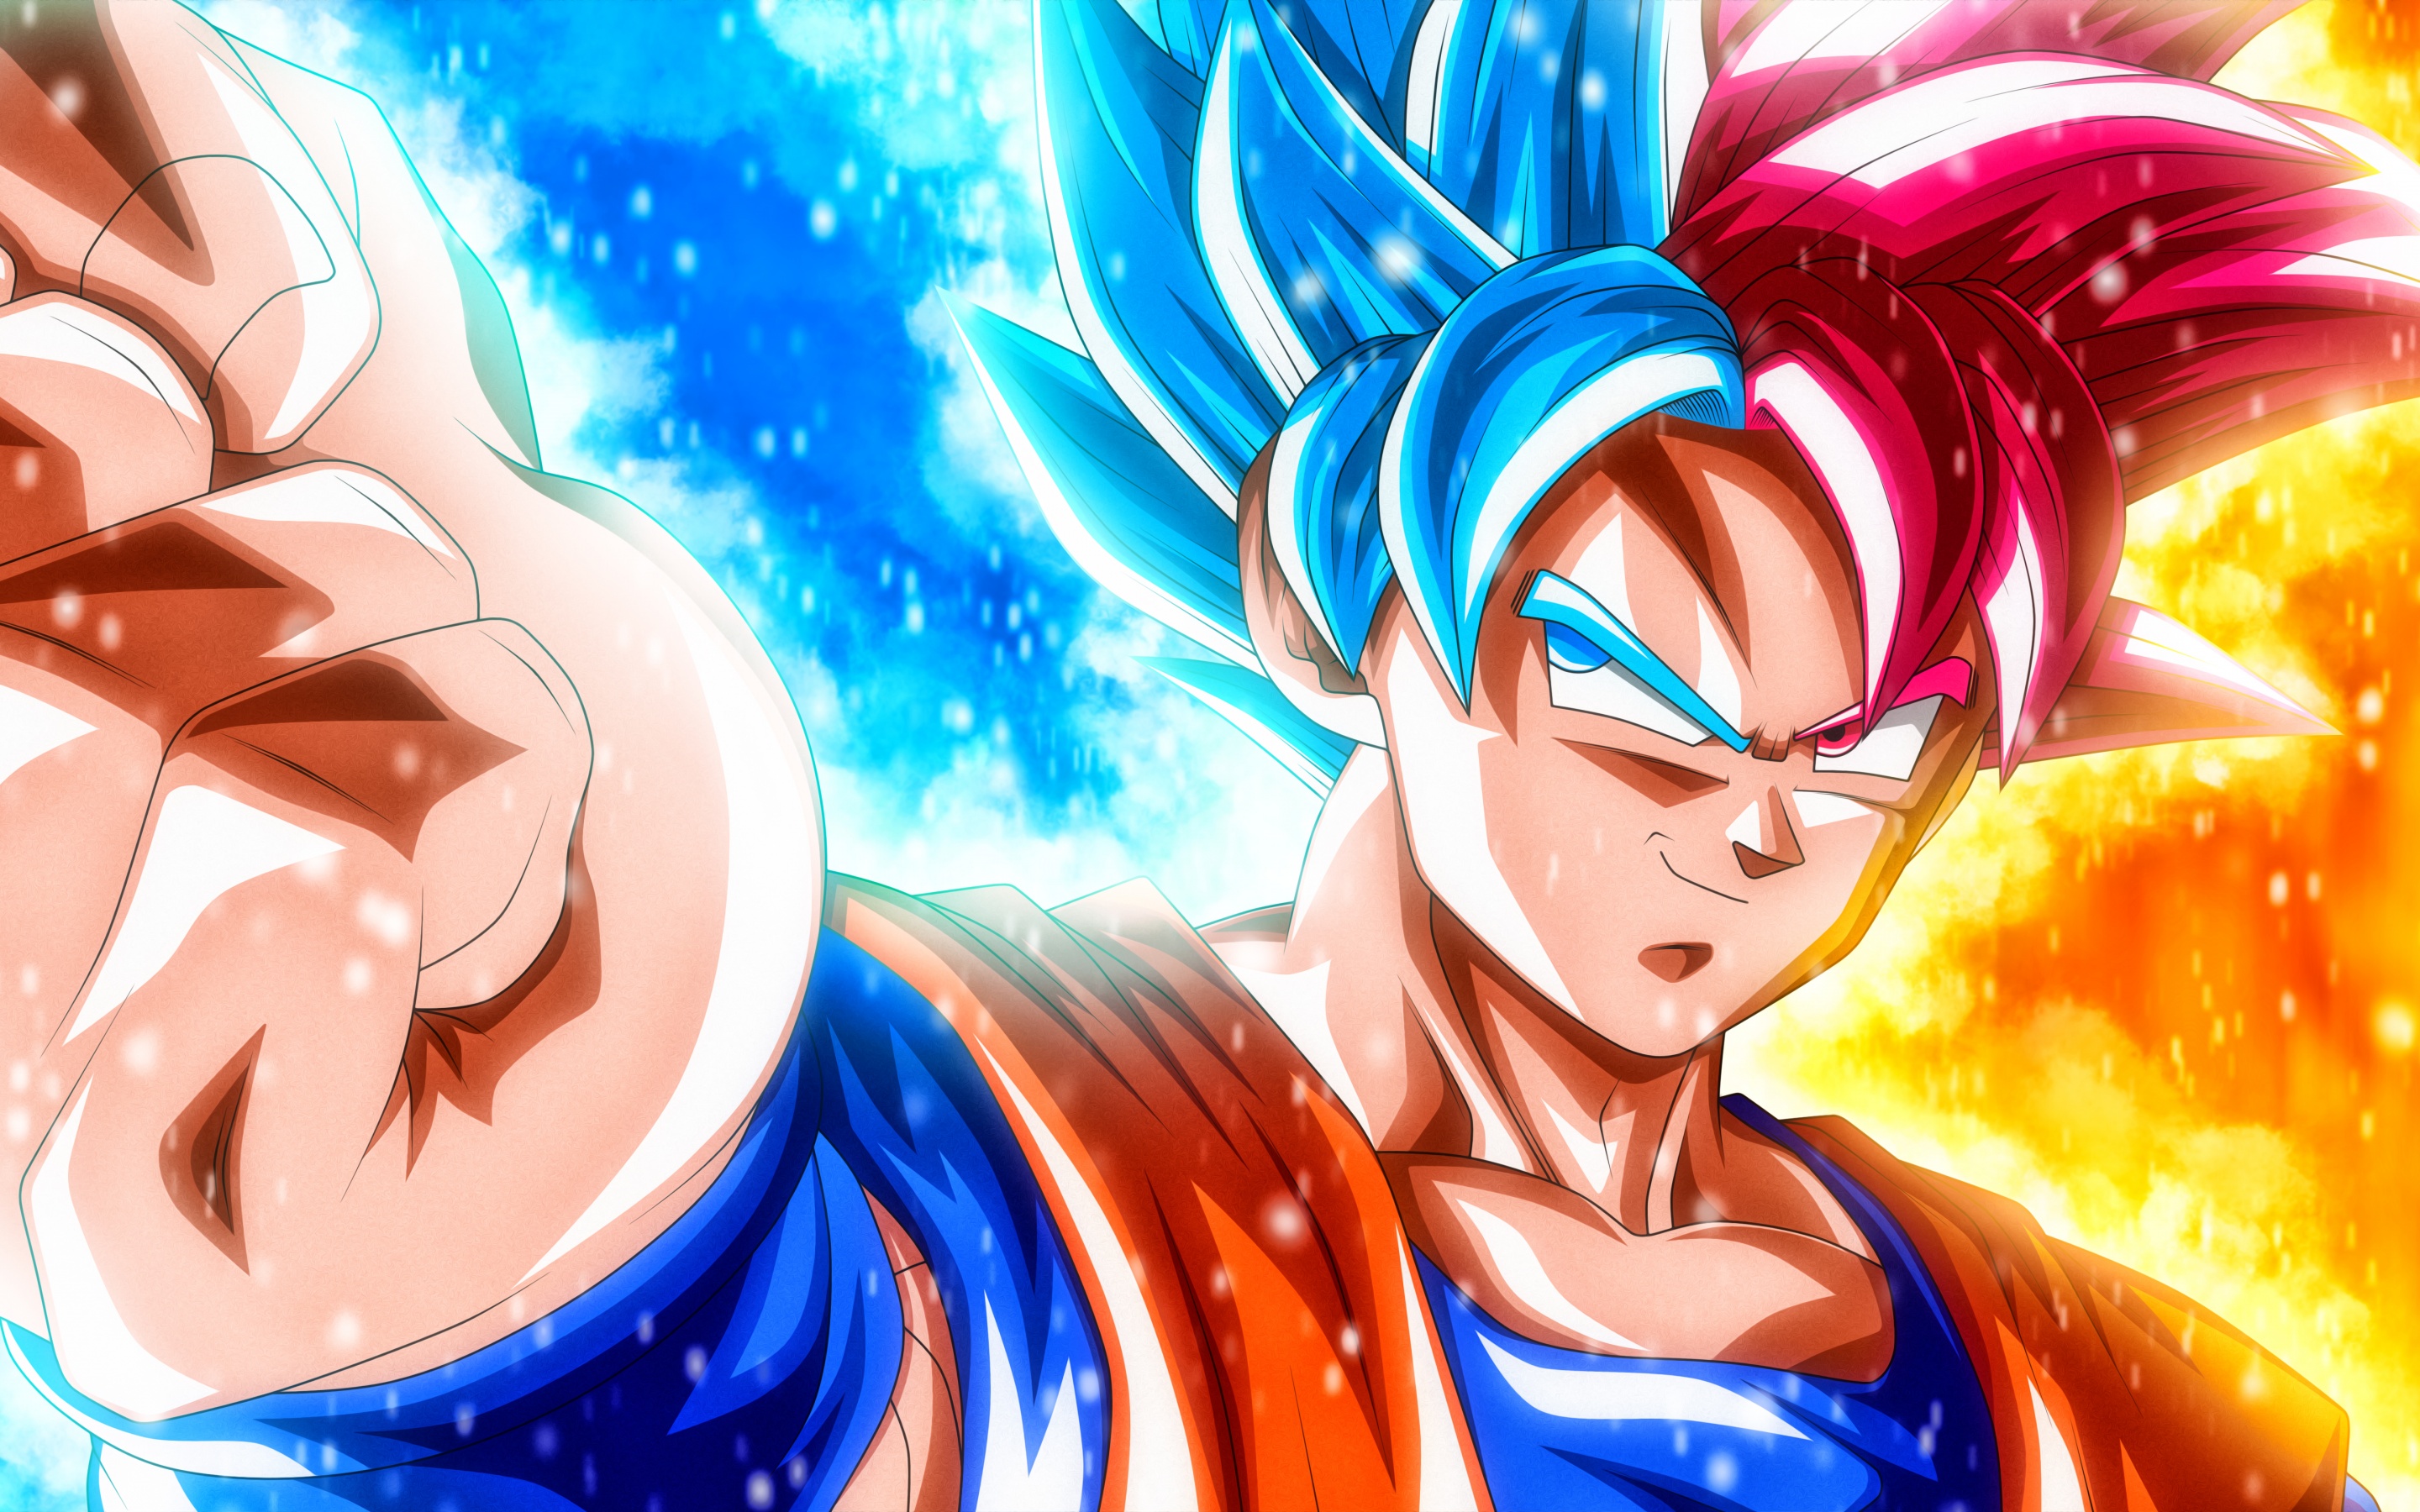 Super Saiyan God Goku (Blue Hair) - wide 5